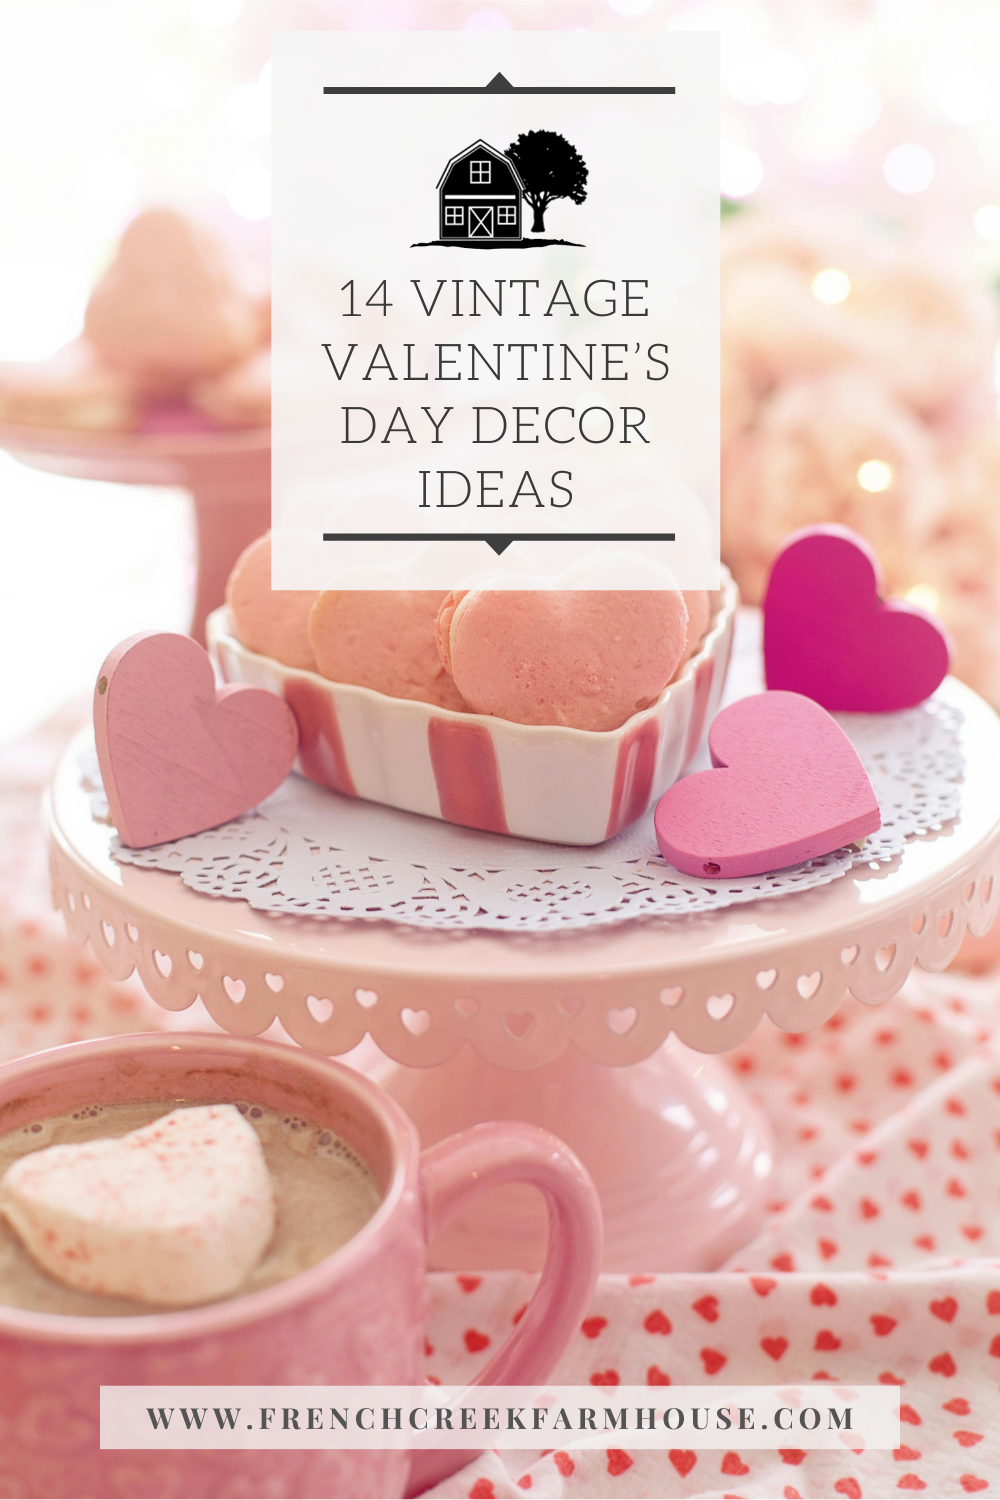 14 ideas for vintage Valentine's Day decor